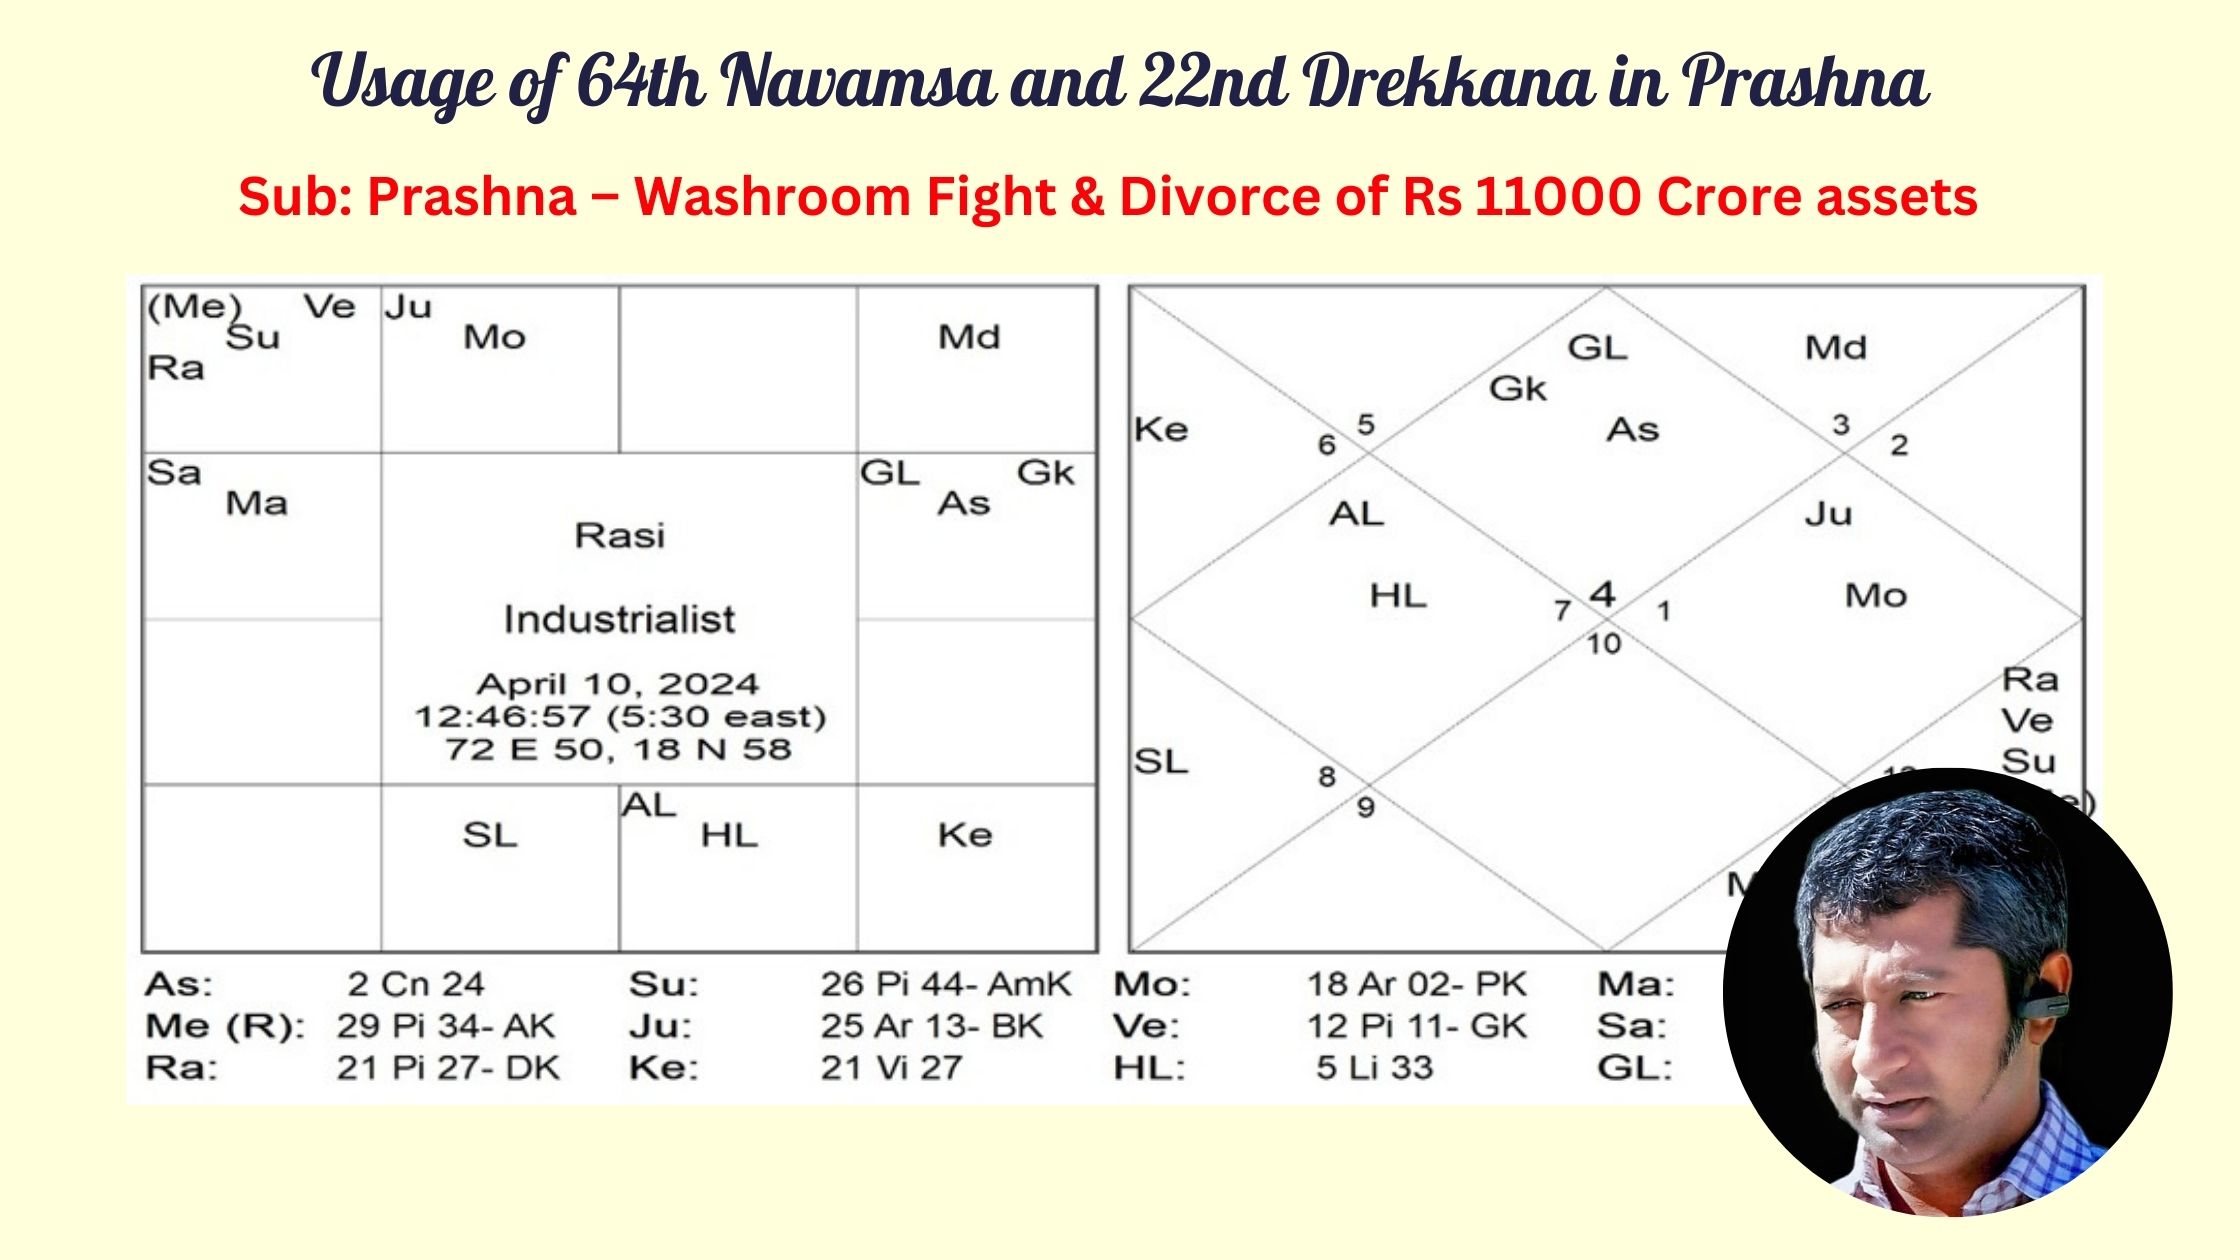 Unknown Usage of 64th Navamsa and 22nd Drekkana in Prashna by Sunil John